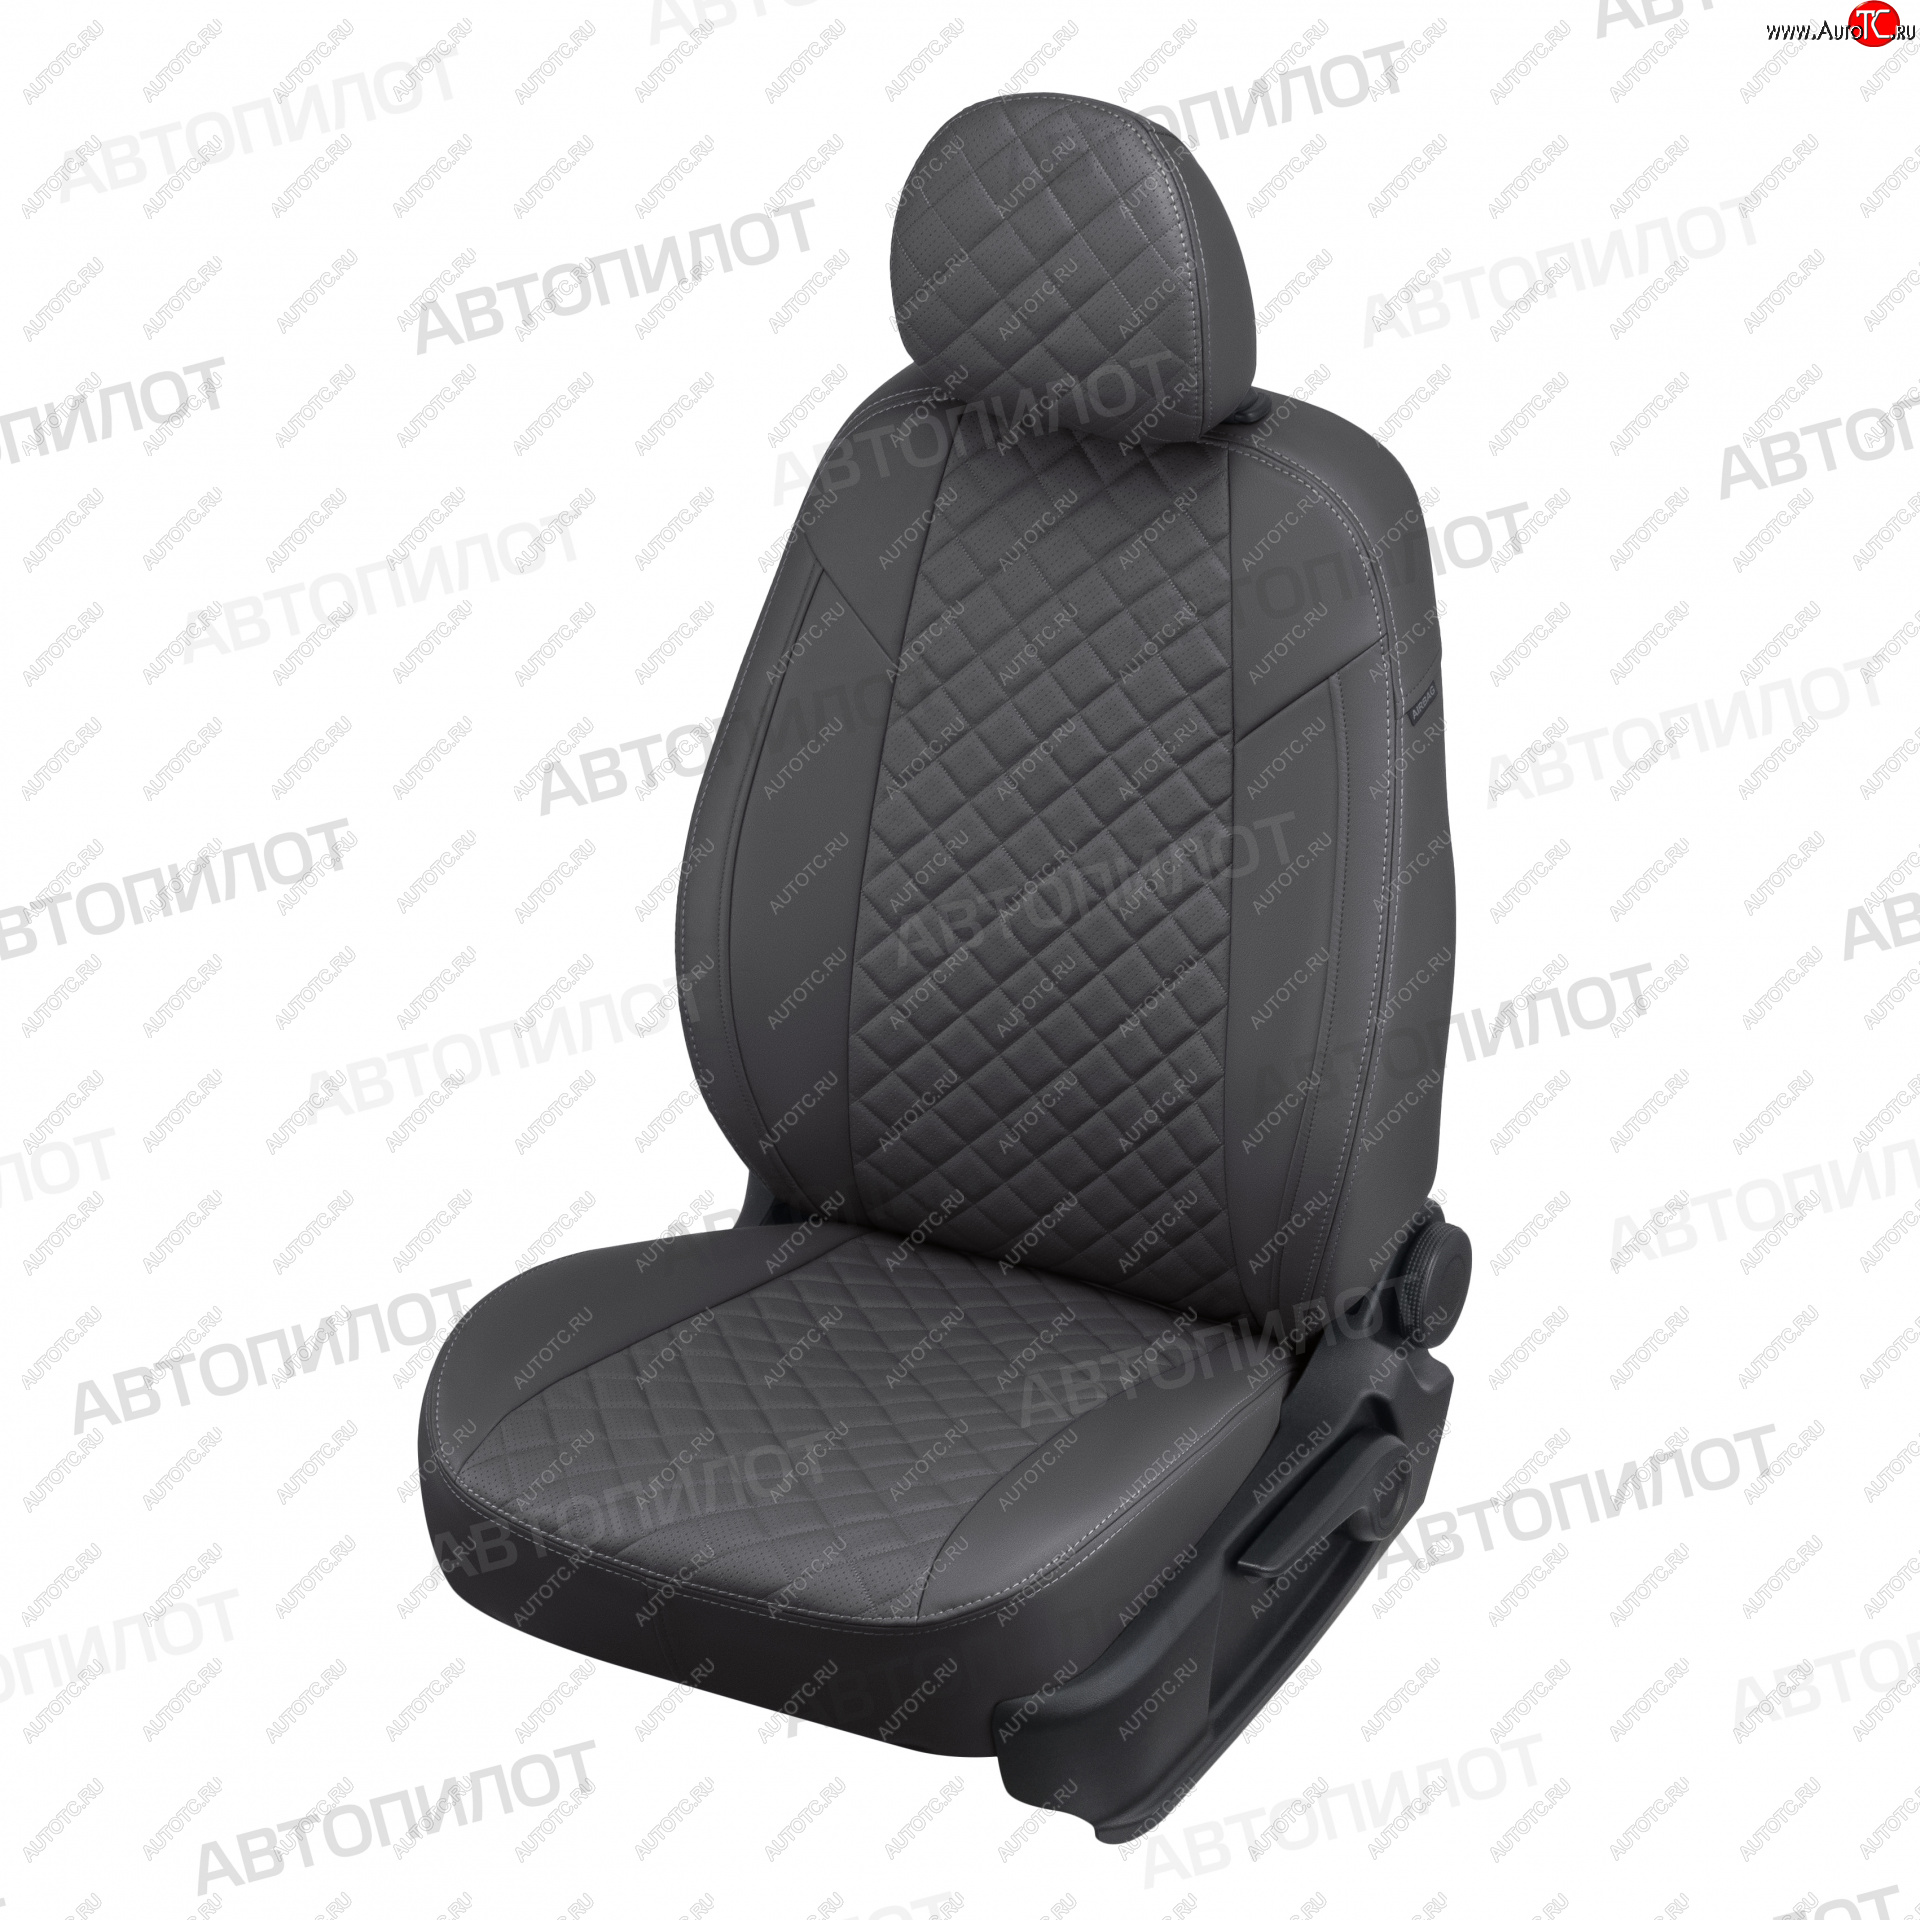 22 299 р. Чехлы сидений (9 мест, экокожа) Автопилот Ромб  Ford Transit  3 (2006-2014) (темно-серый)